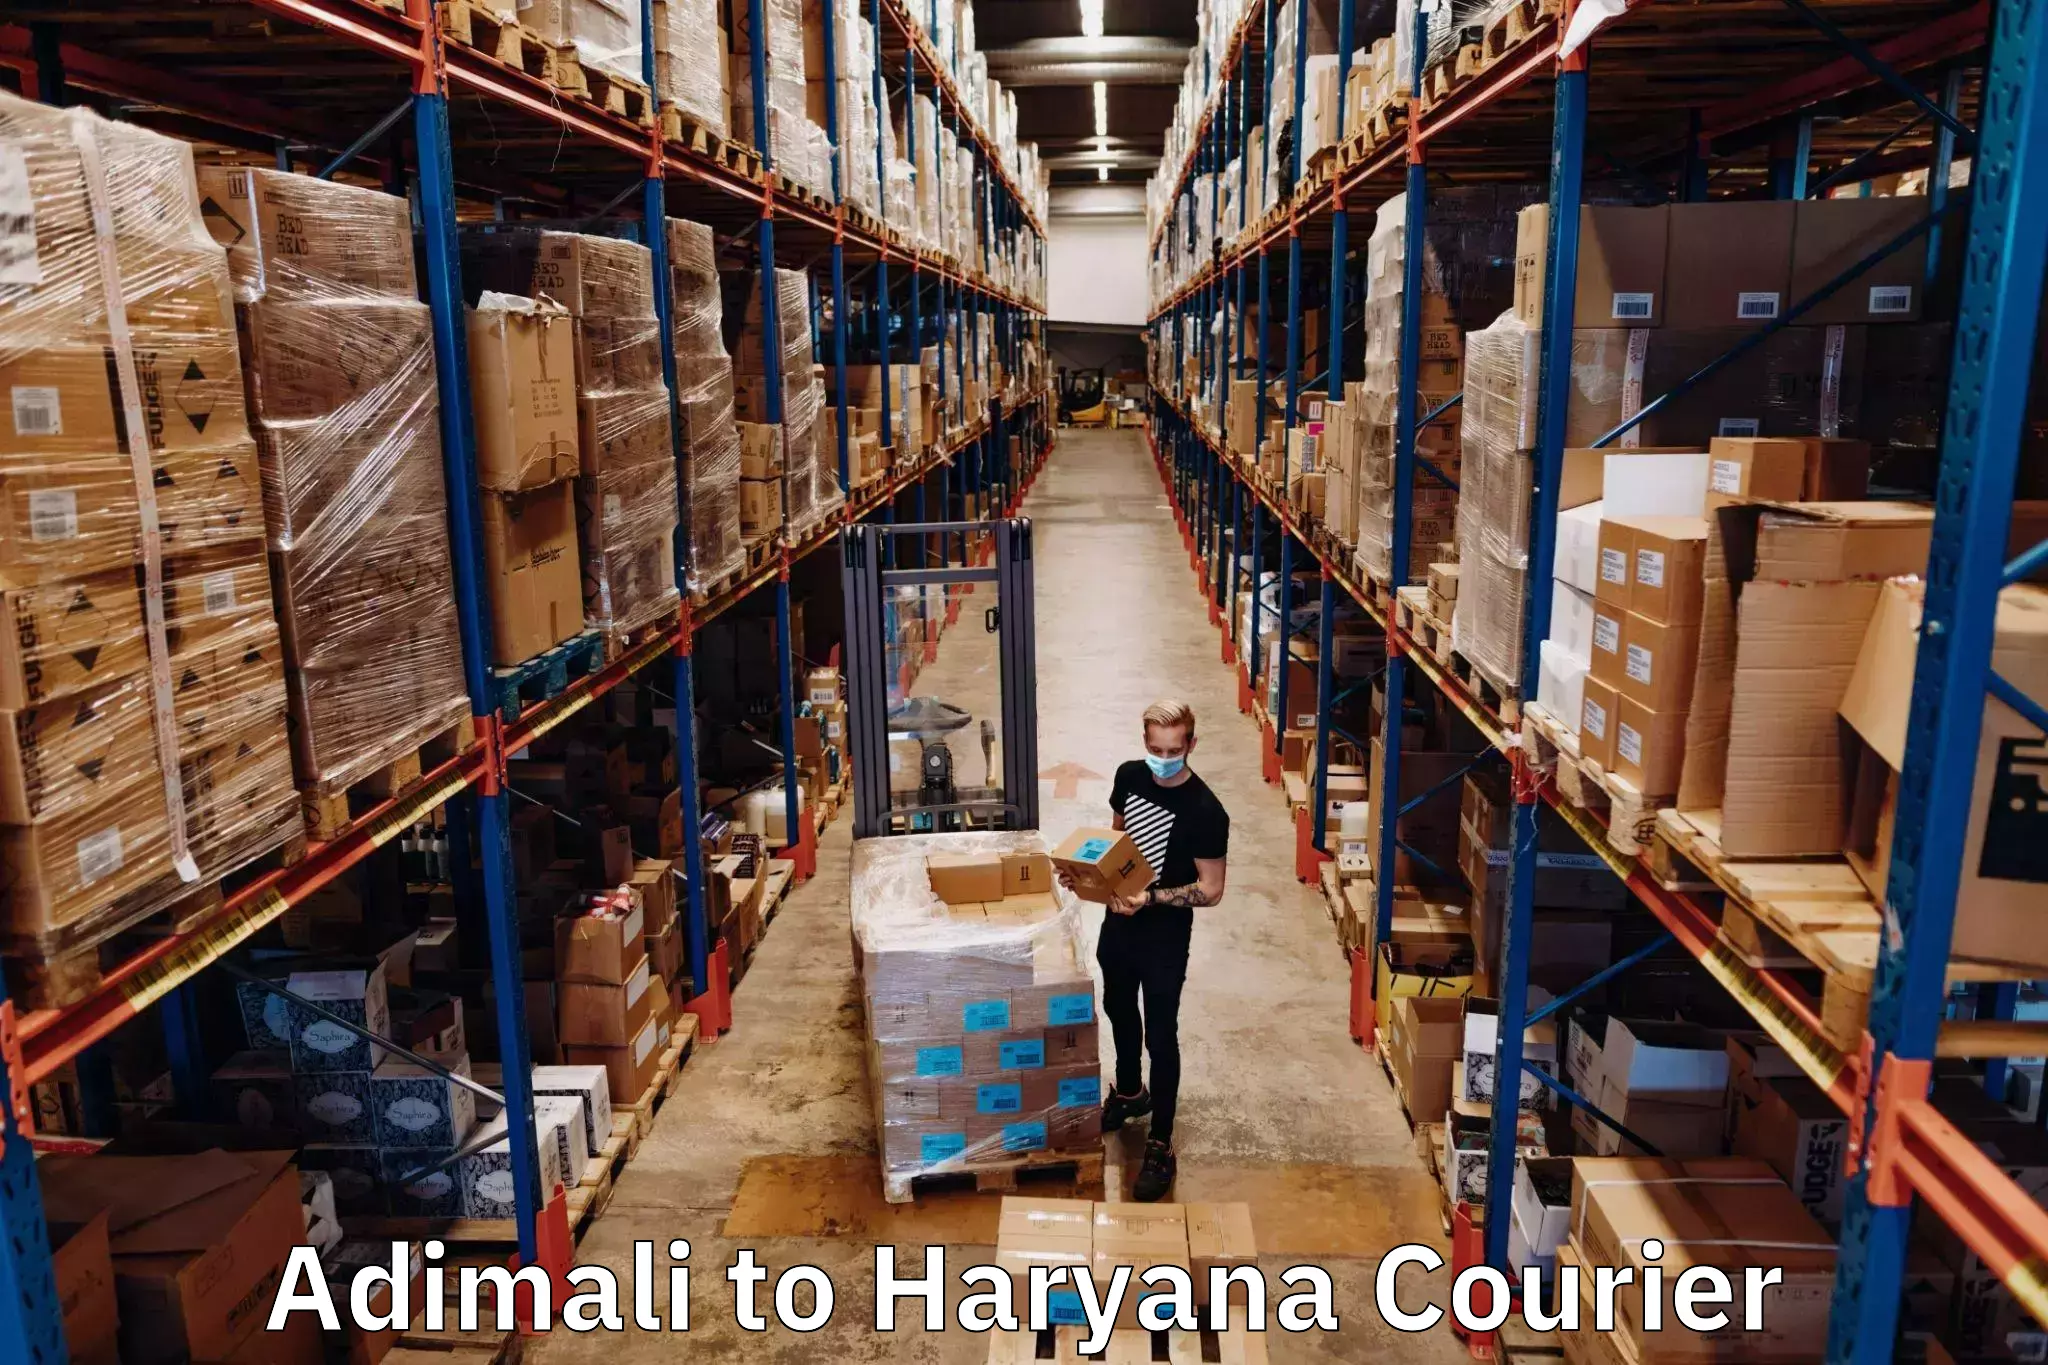 International courier networks Adimali to Hansi